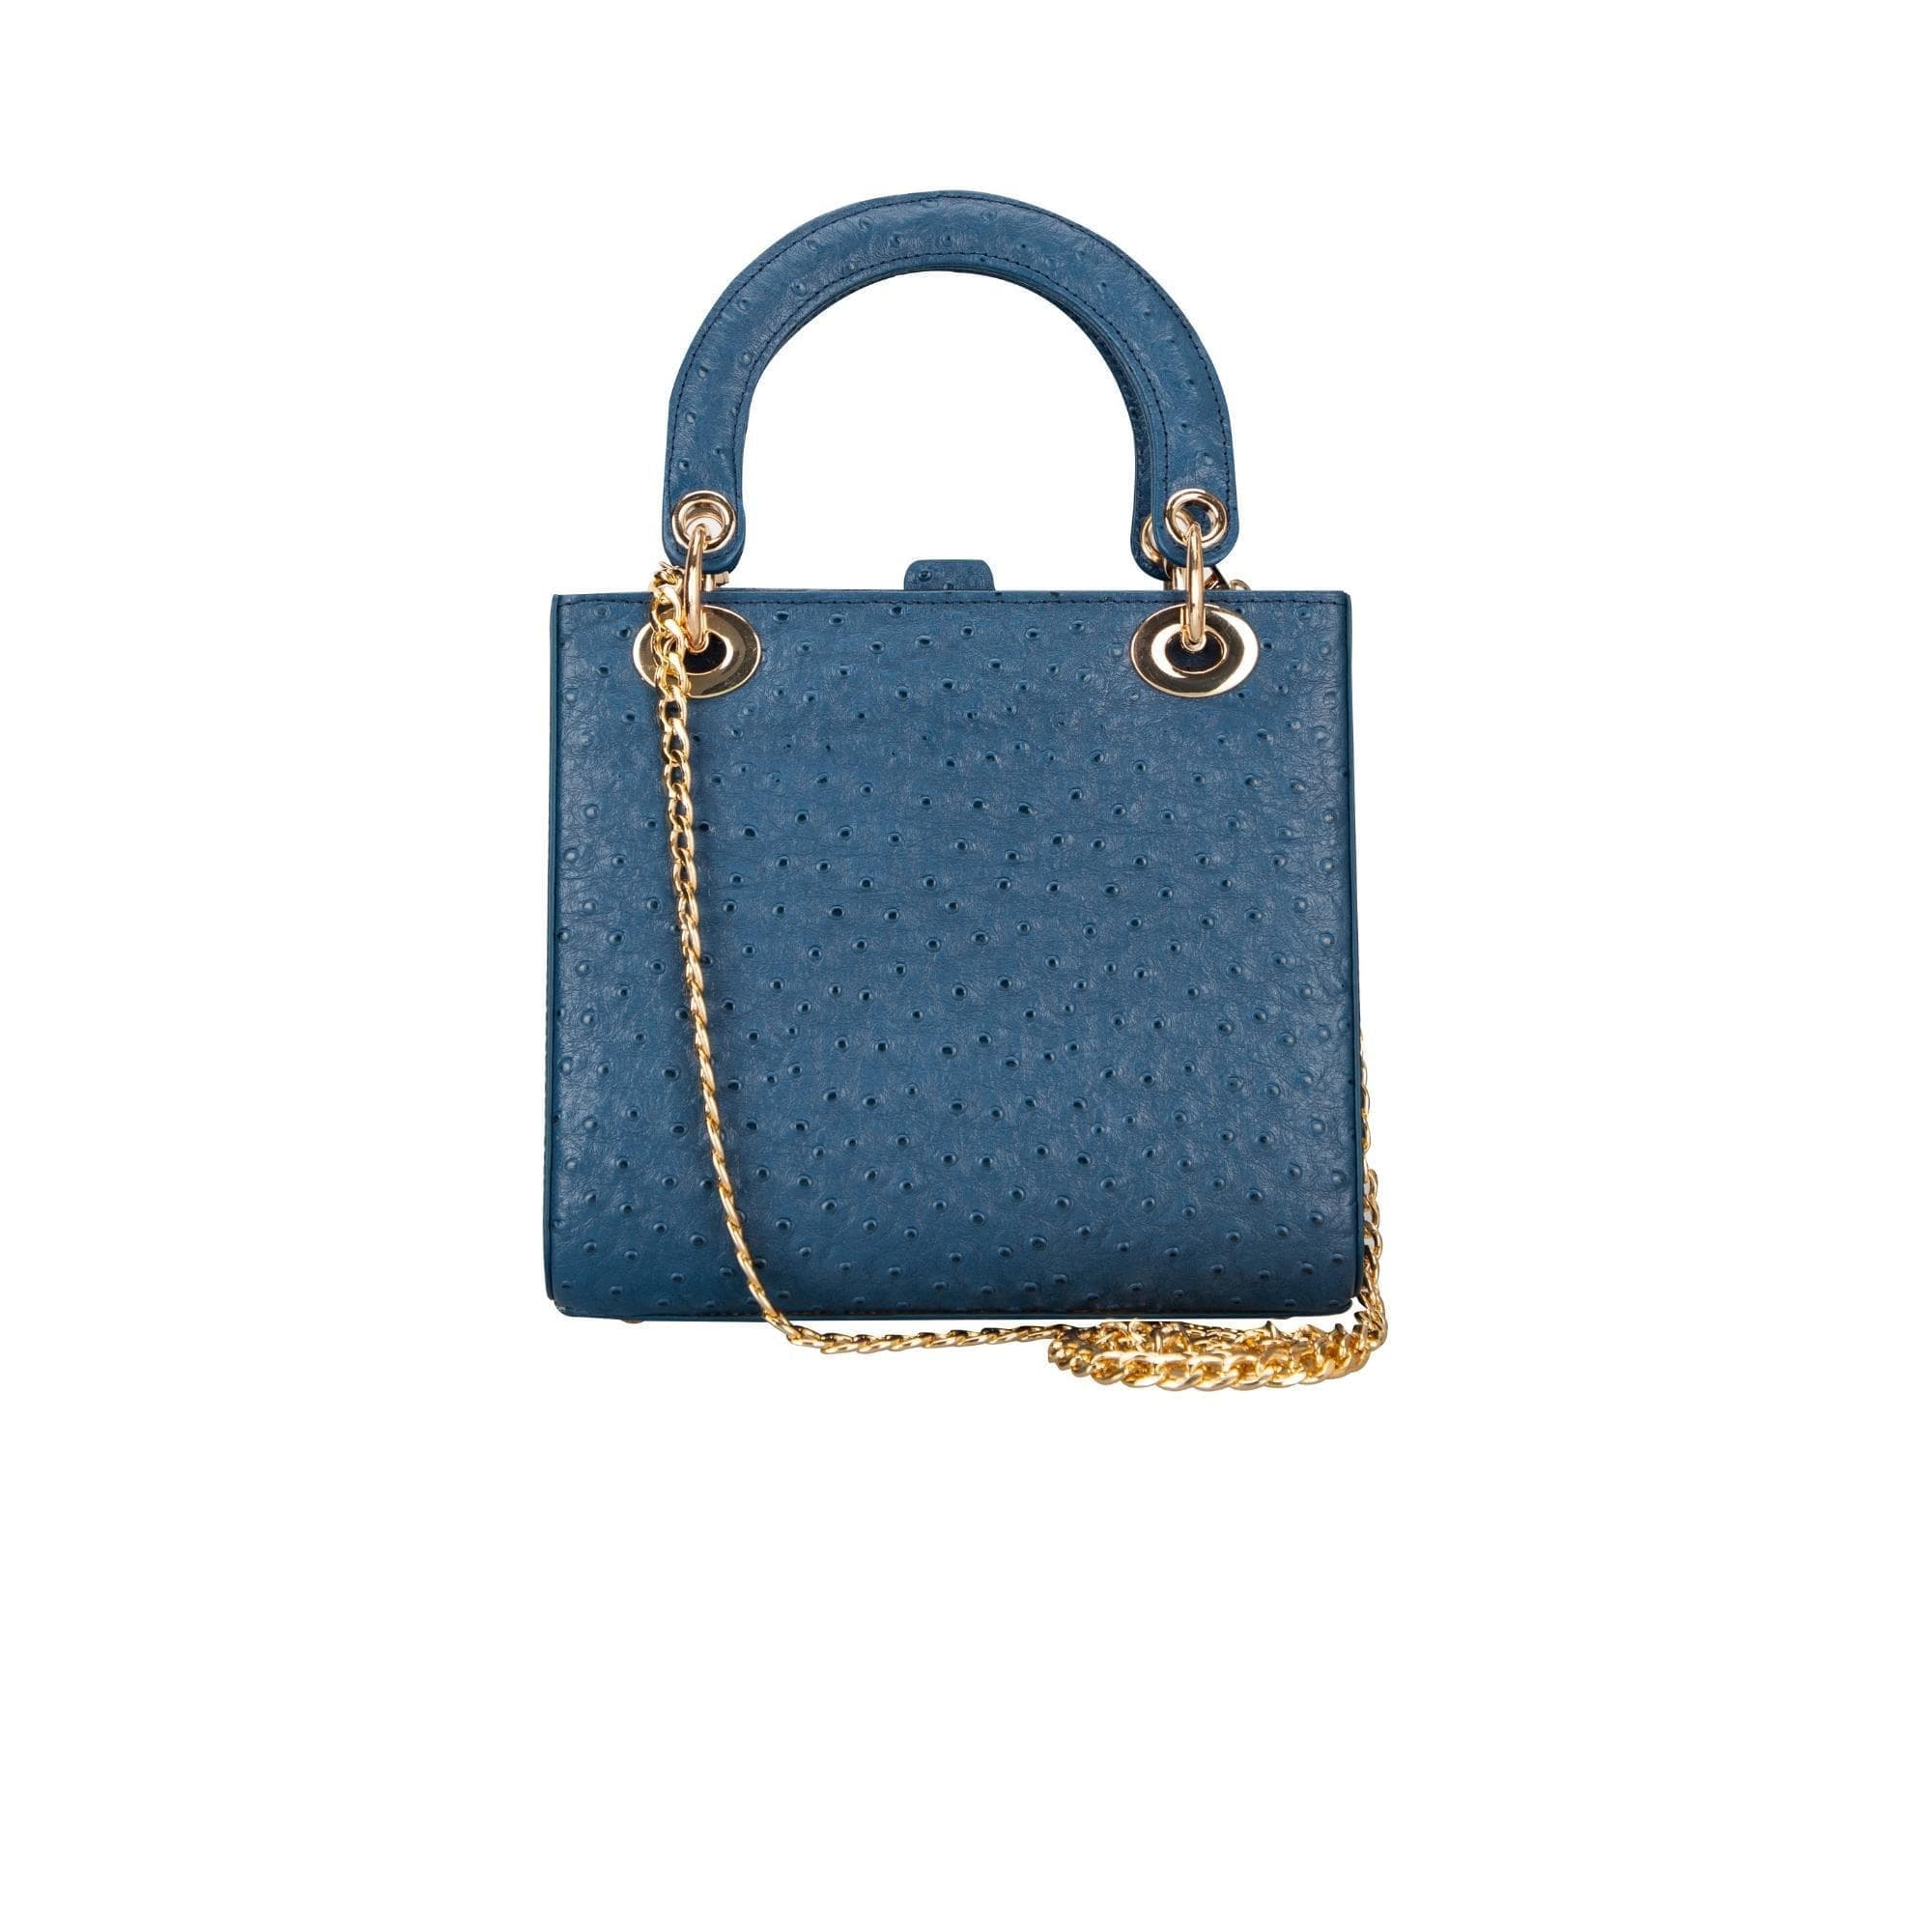 Pinny Geniune Leather Women’s Bag Cobalt Blue Ostrich Bouletta LTD